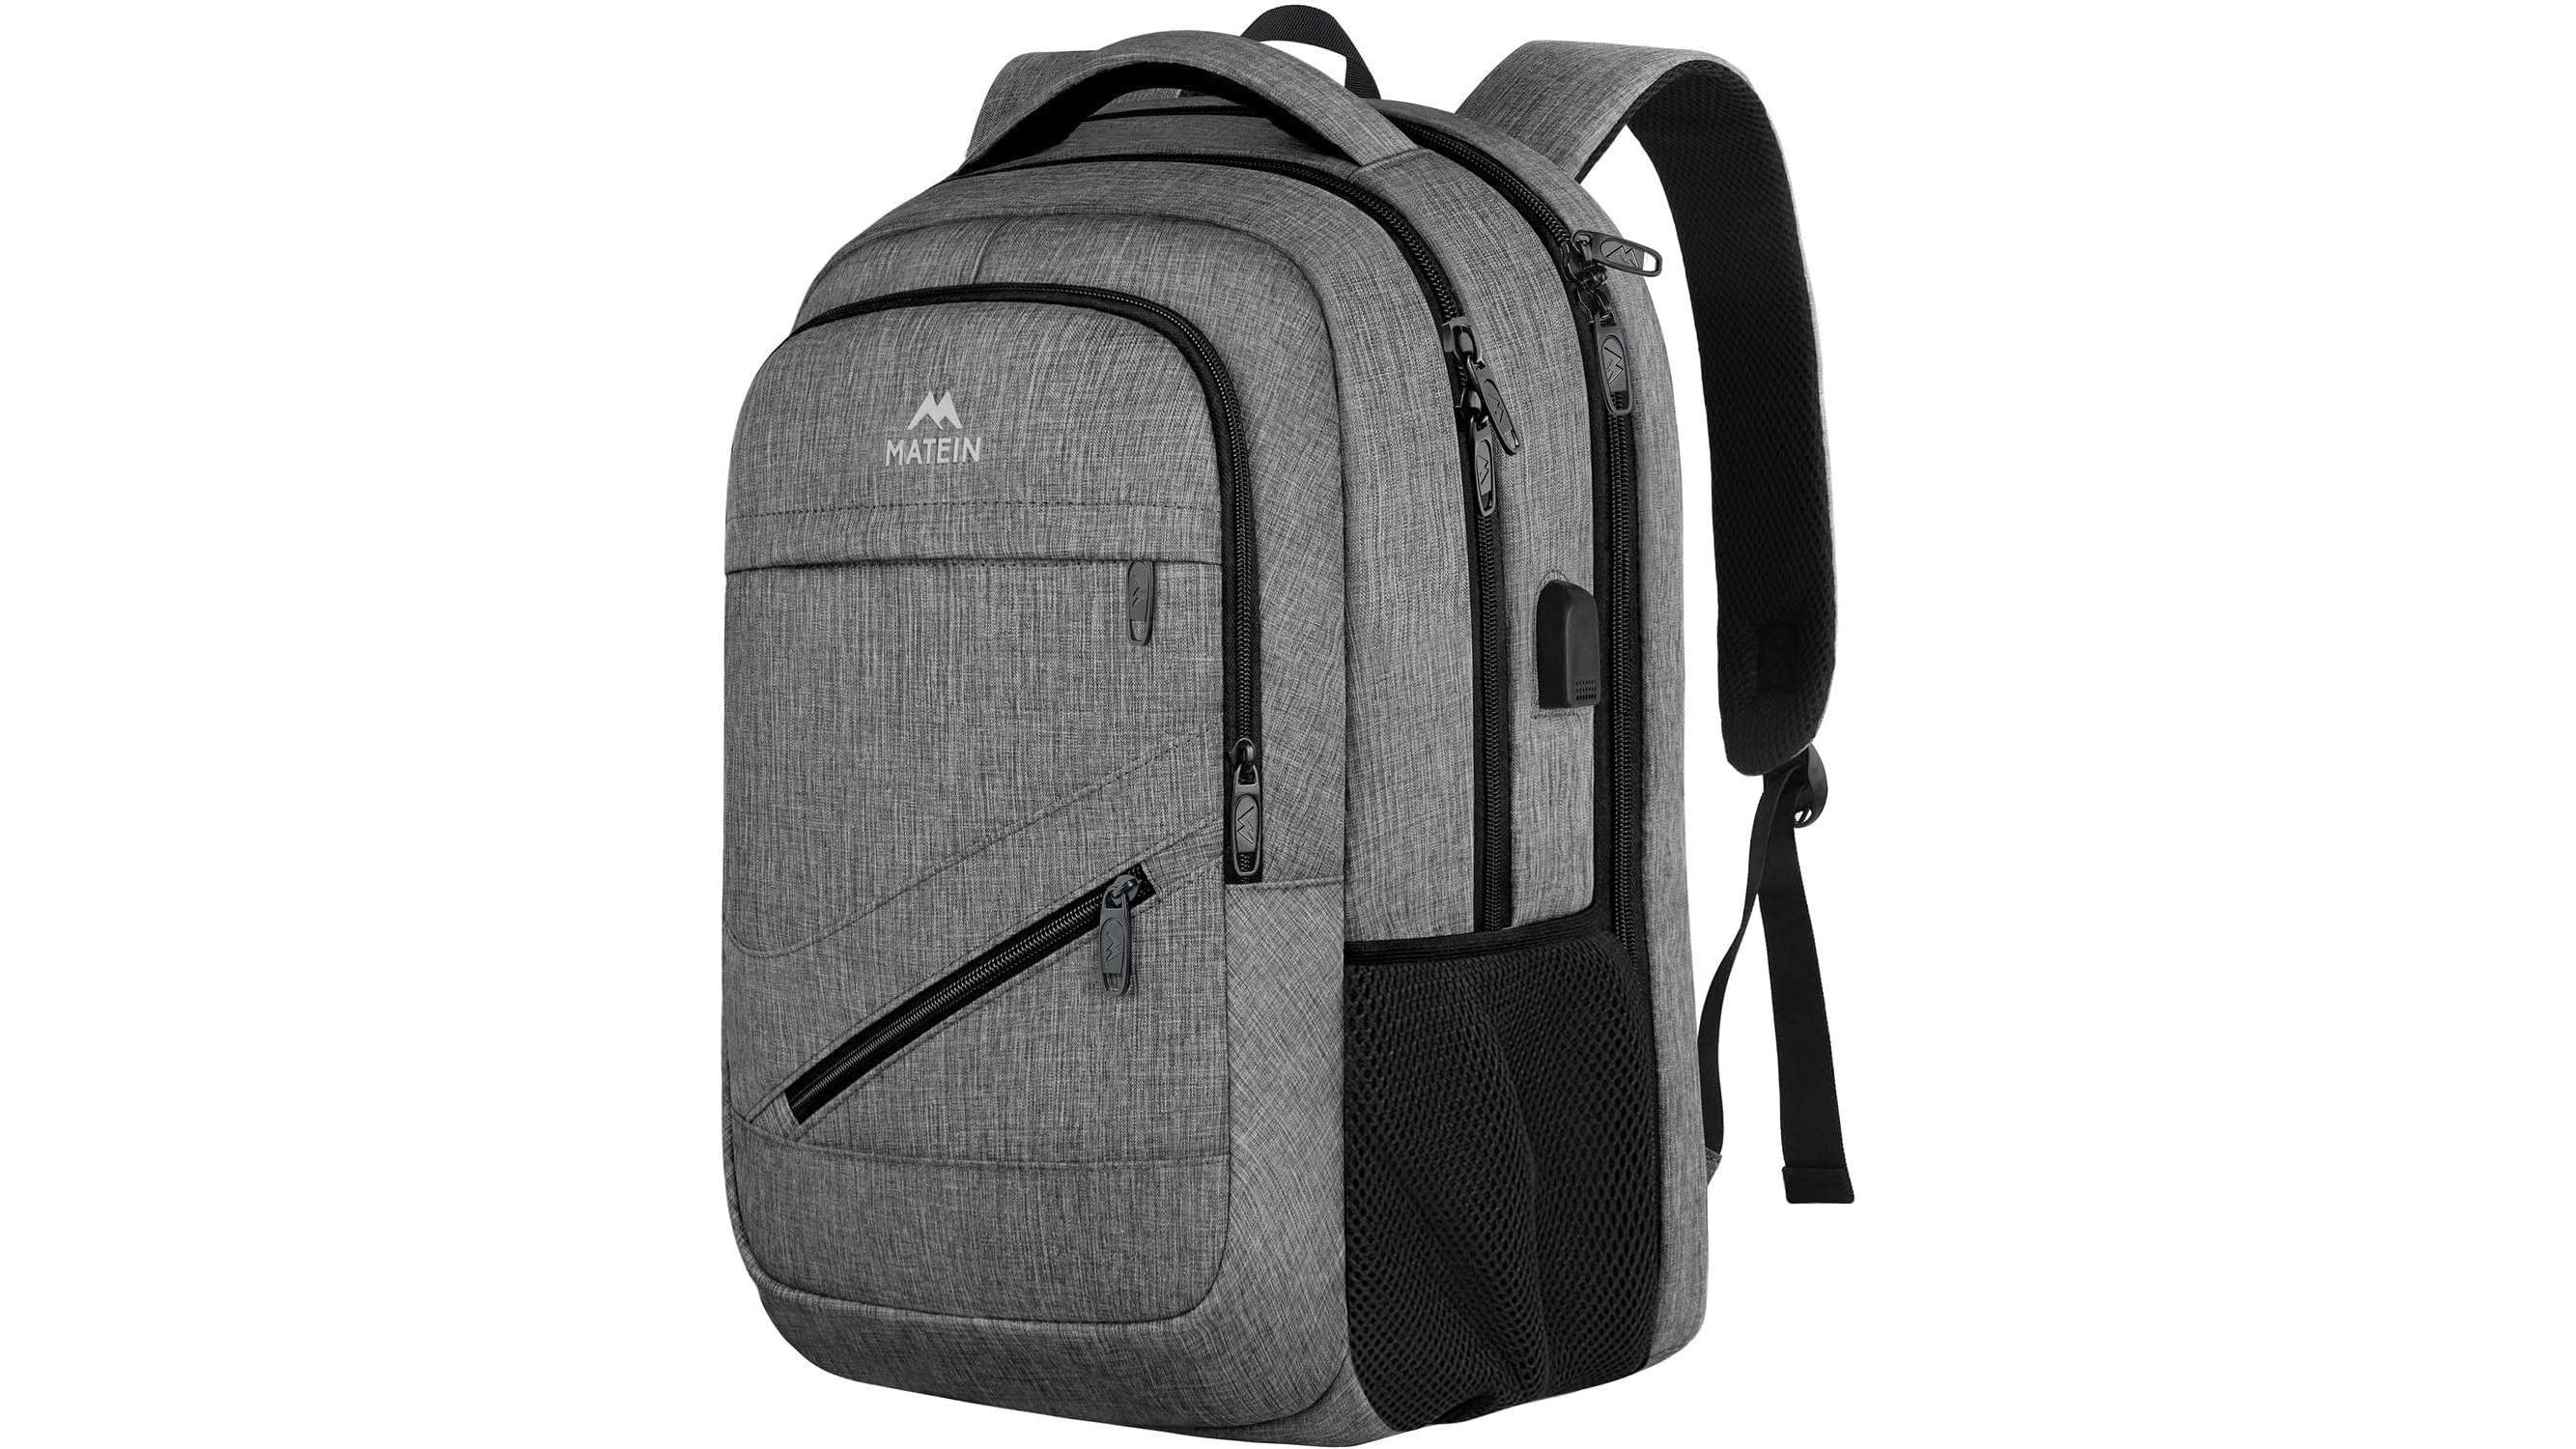 matein-travel-backpack-169-render-01